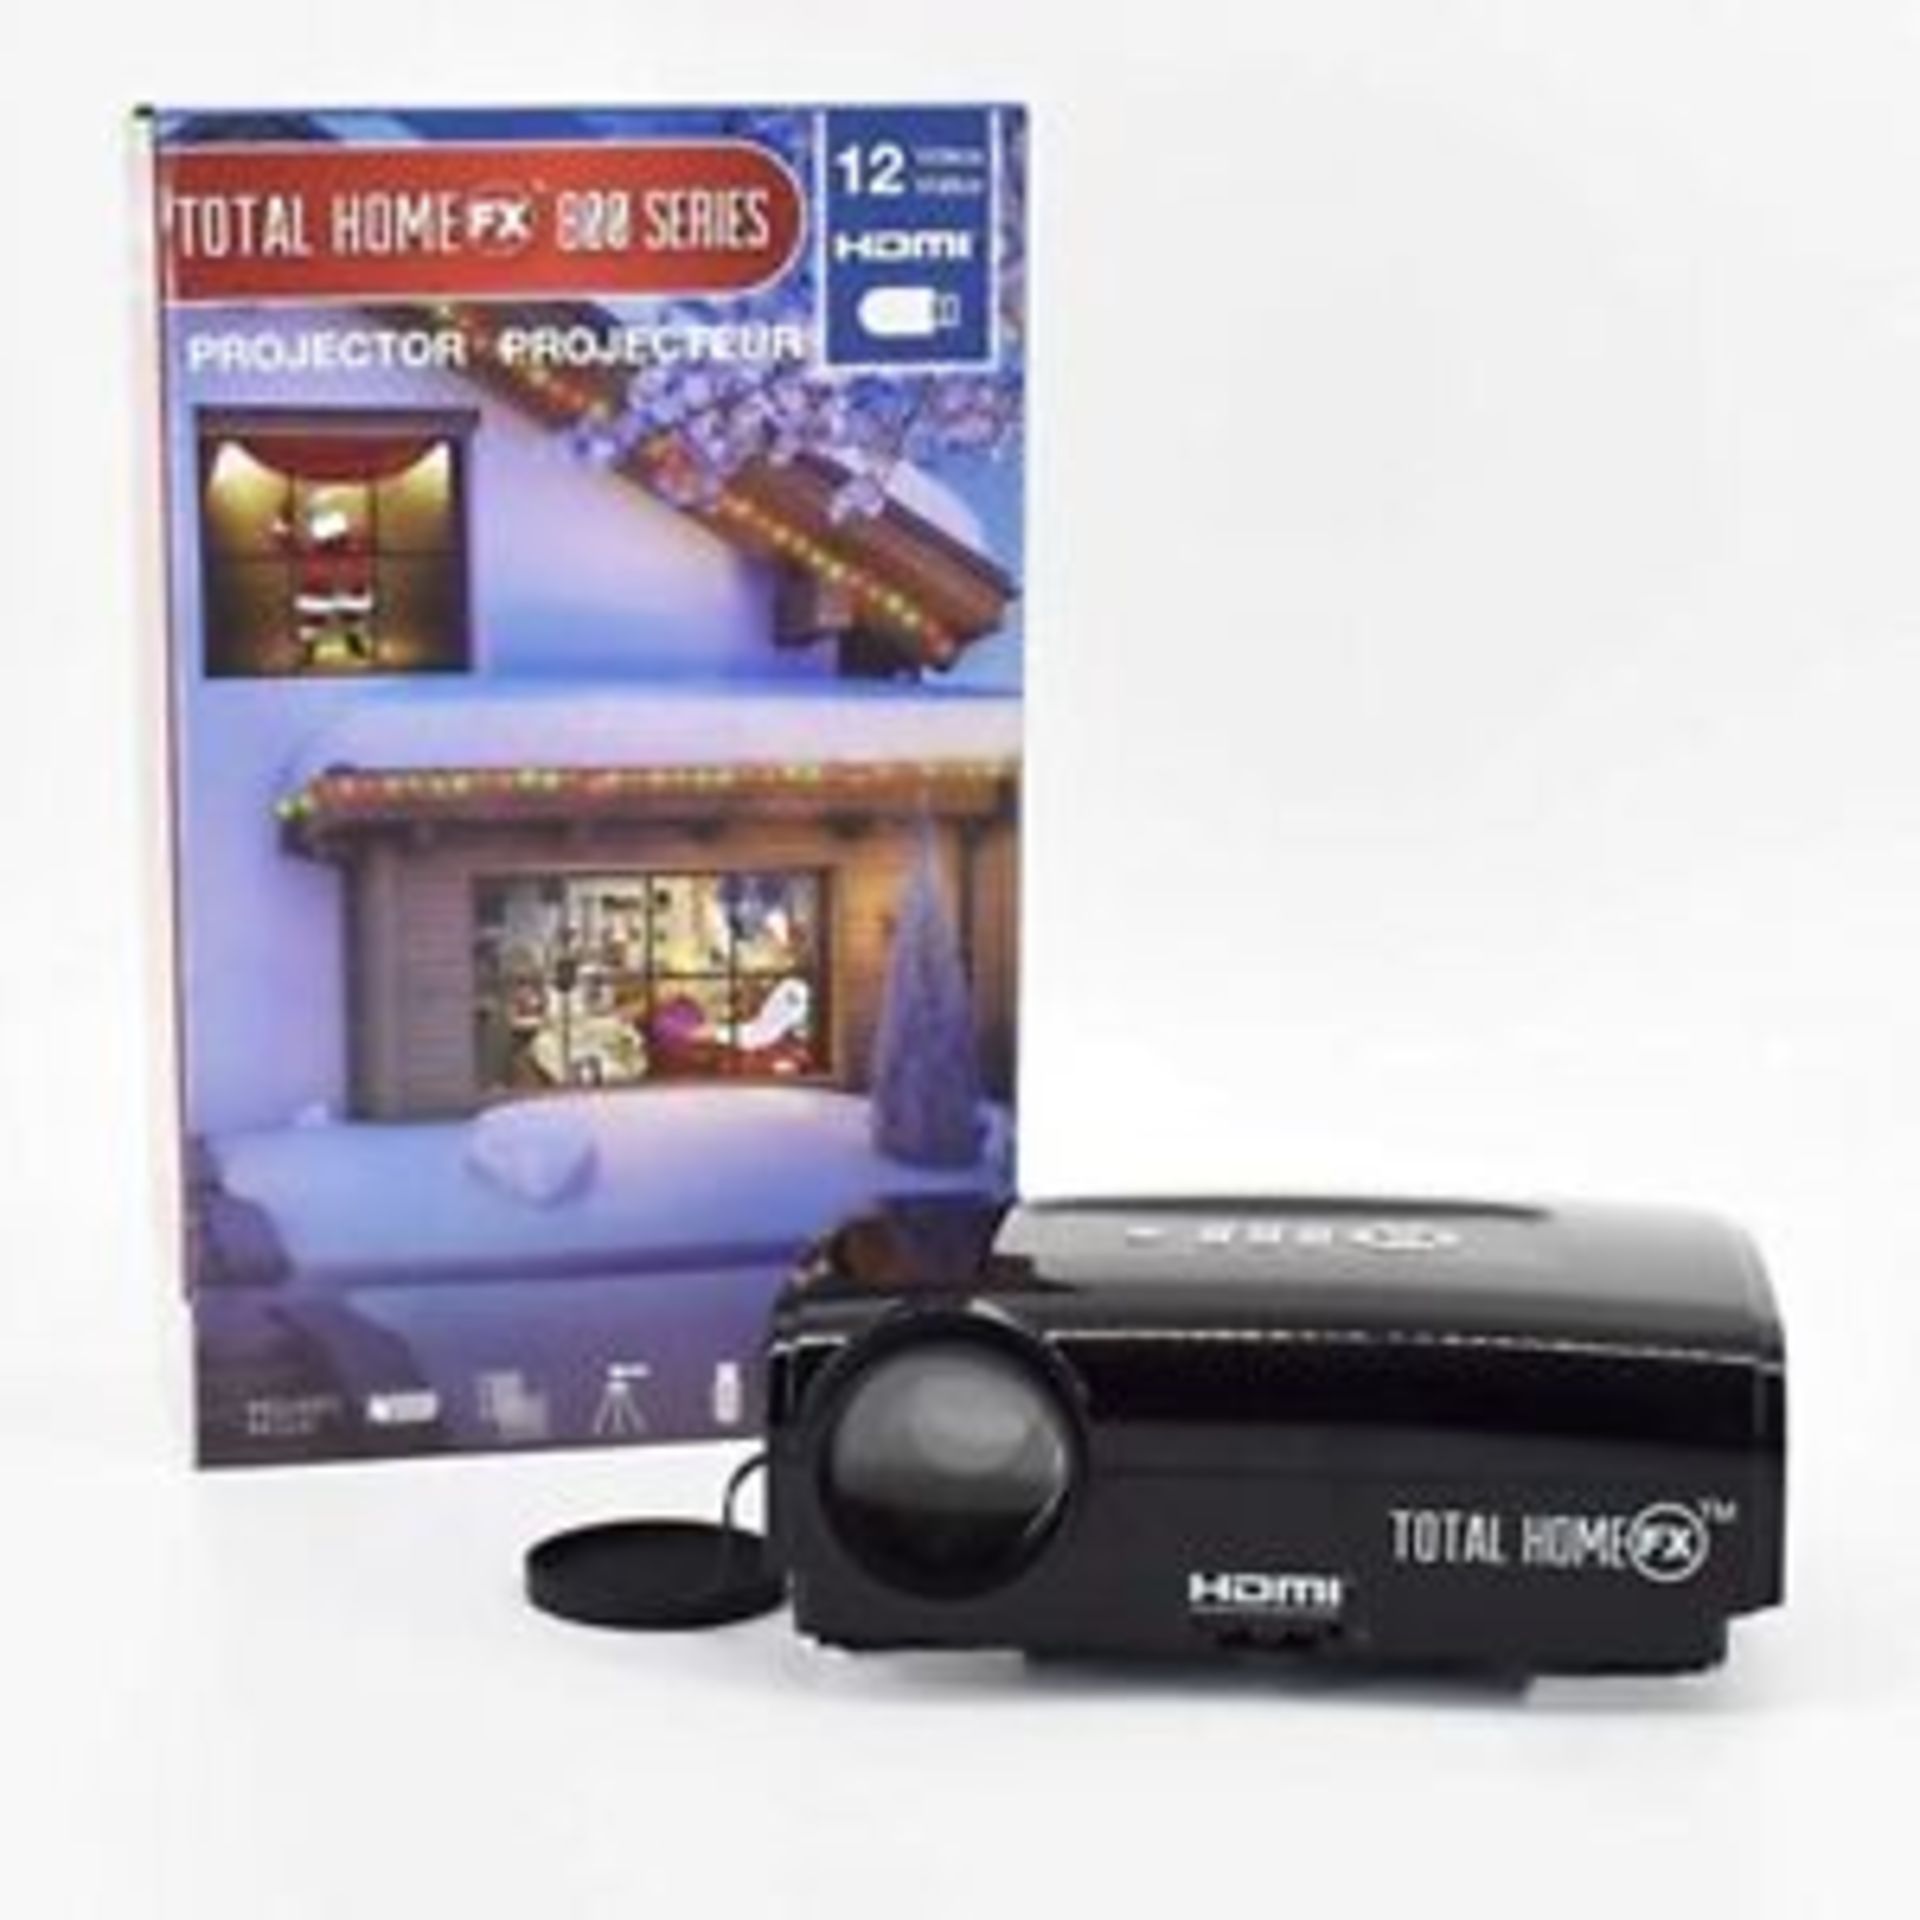 Total Home FX USB HDMI Projector 800 Series Halloween Christmas Window Display - Image 3 of 12